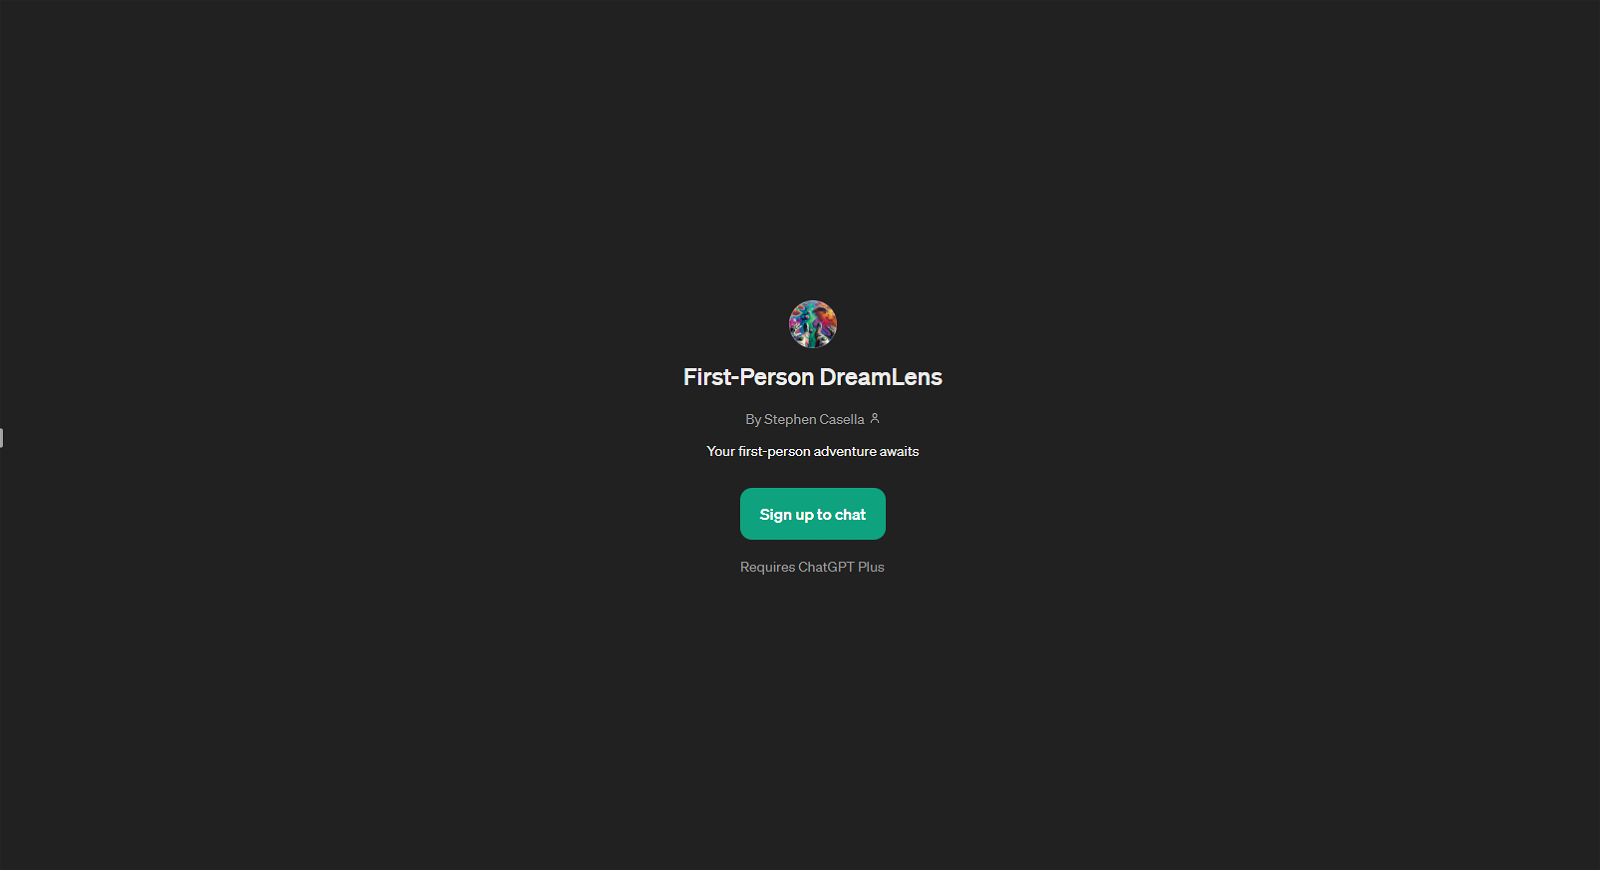 First-Person DreamLens website